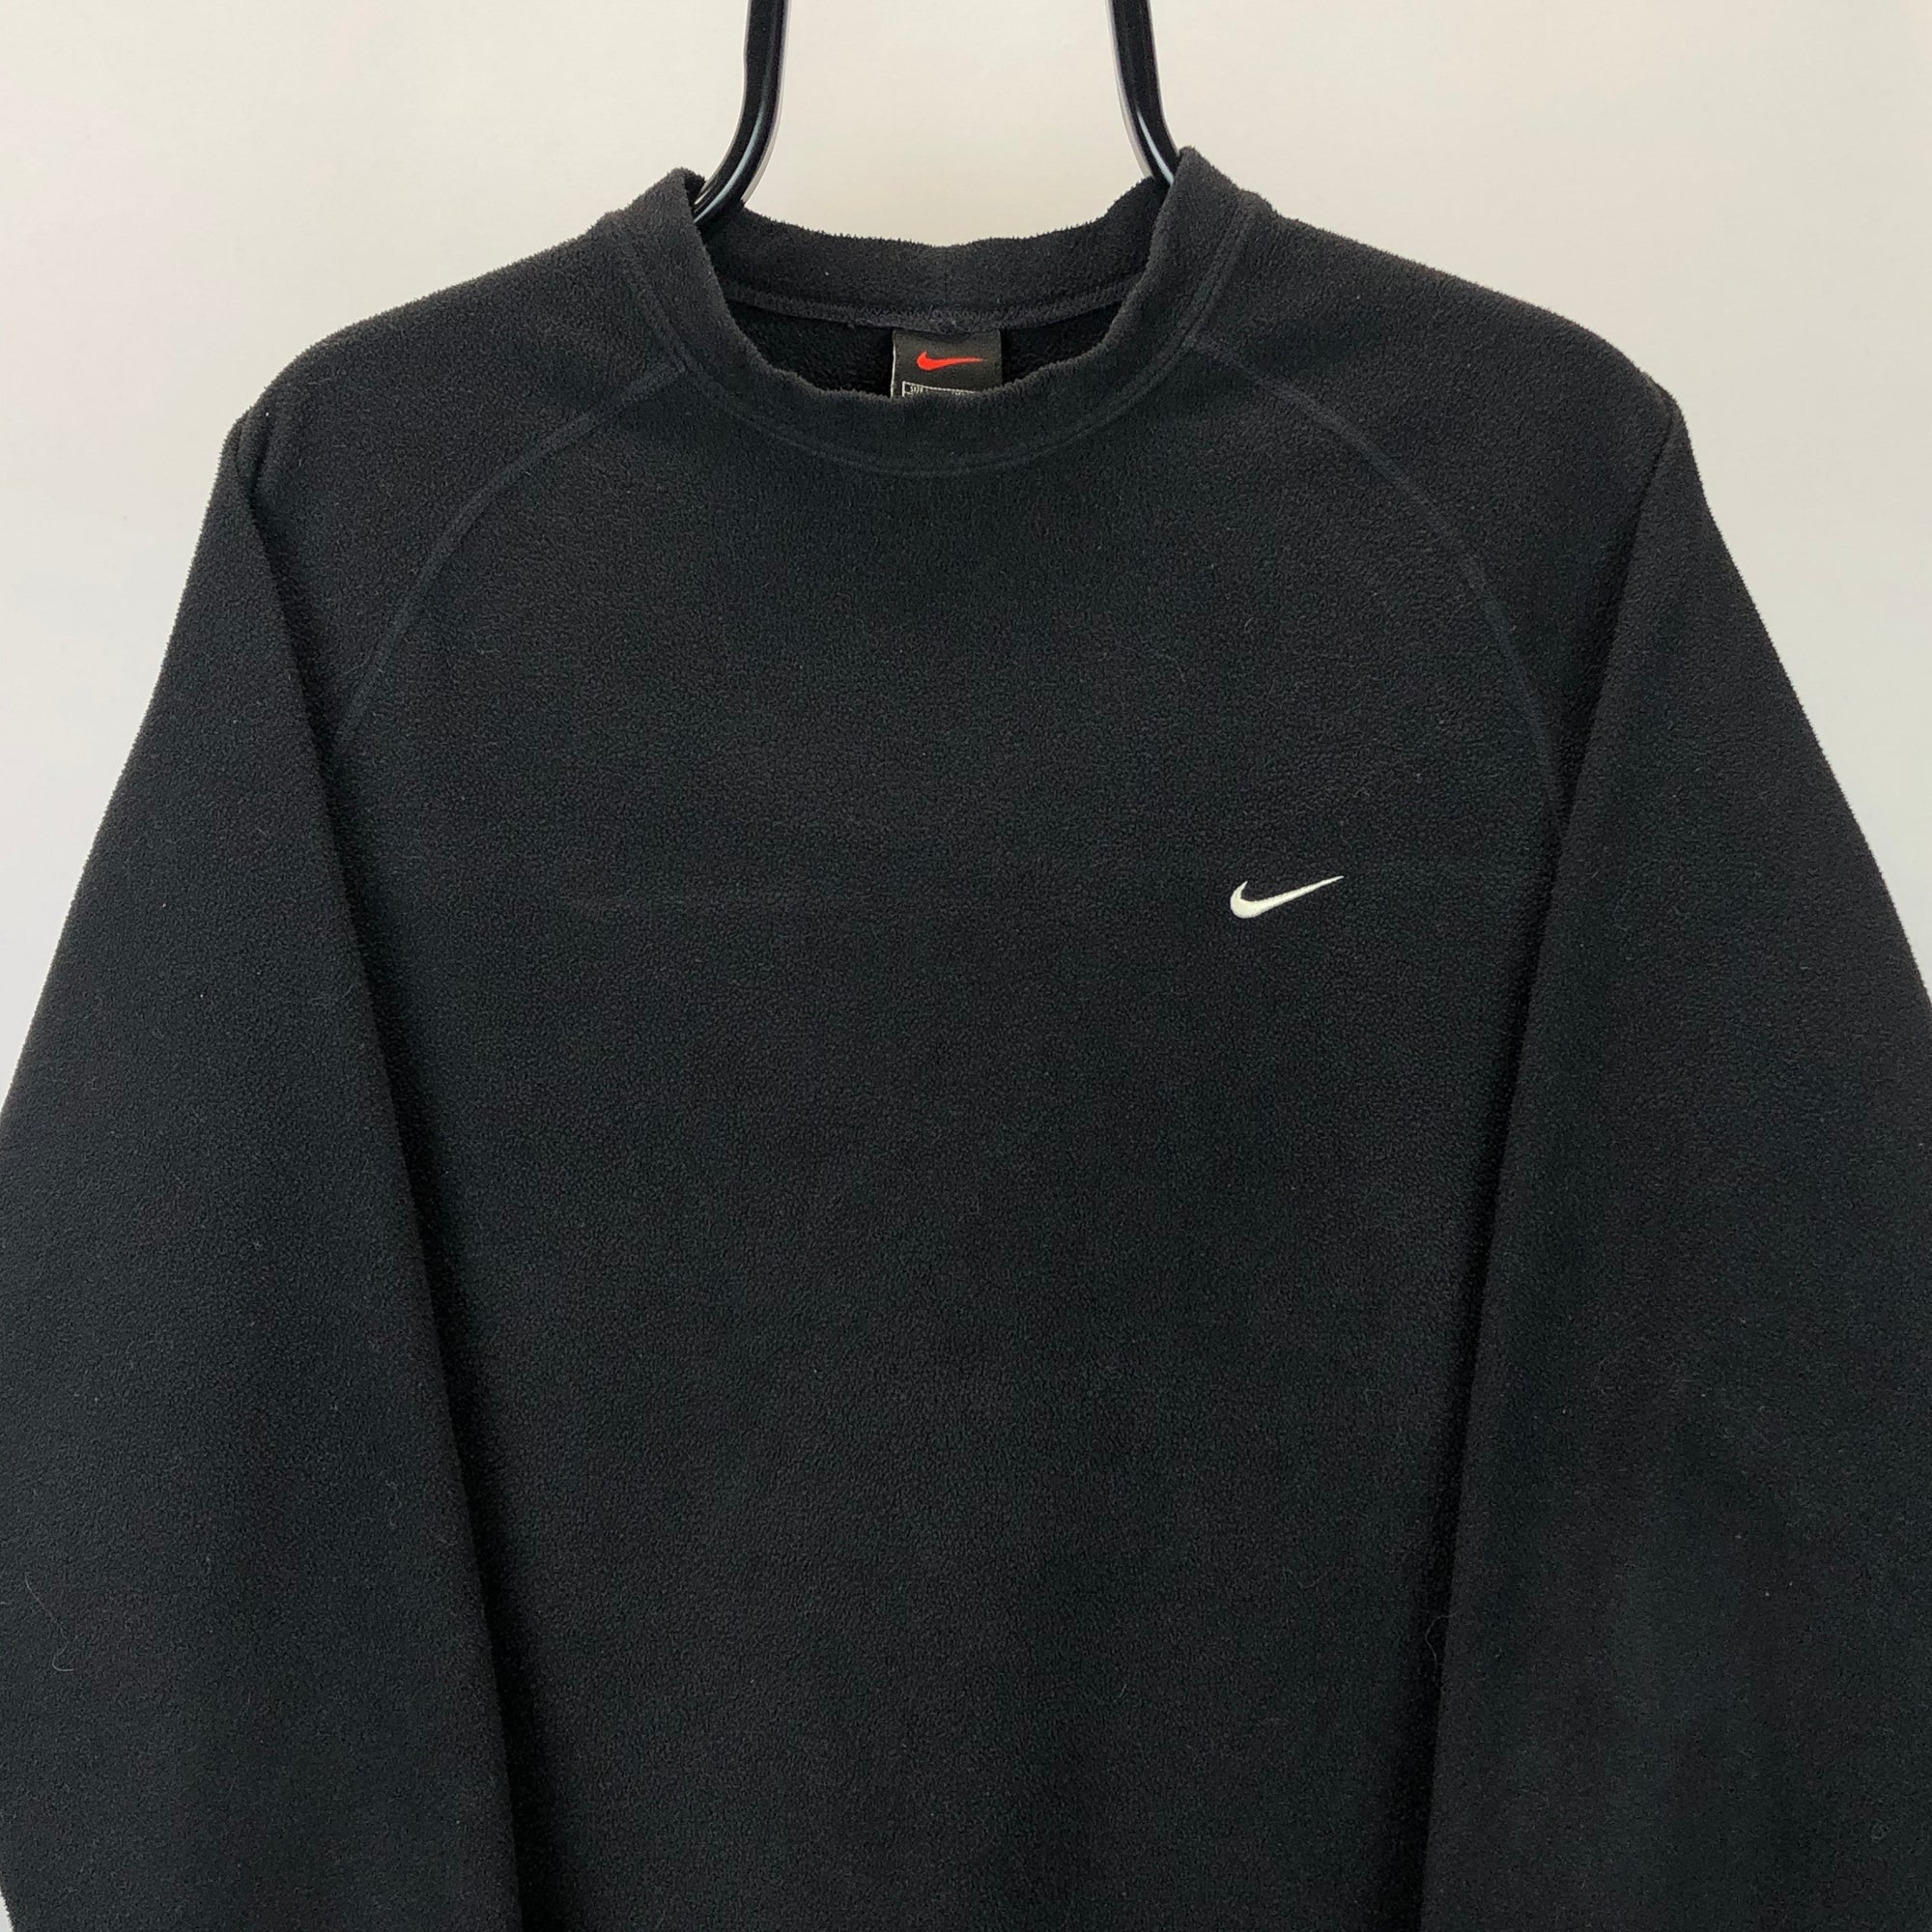 Vintage 90s Nike Embroidered Small Swoosh Fleece Sweatshirt in Black - Men's Medium/Women's Large